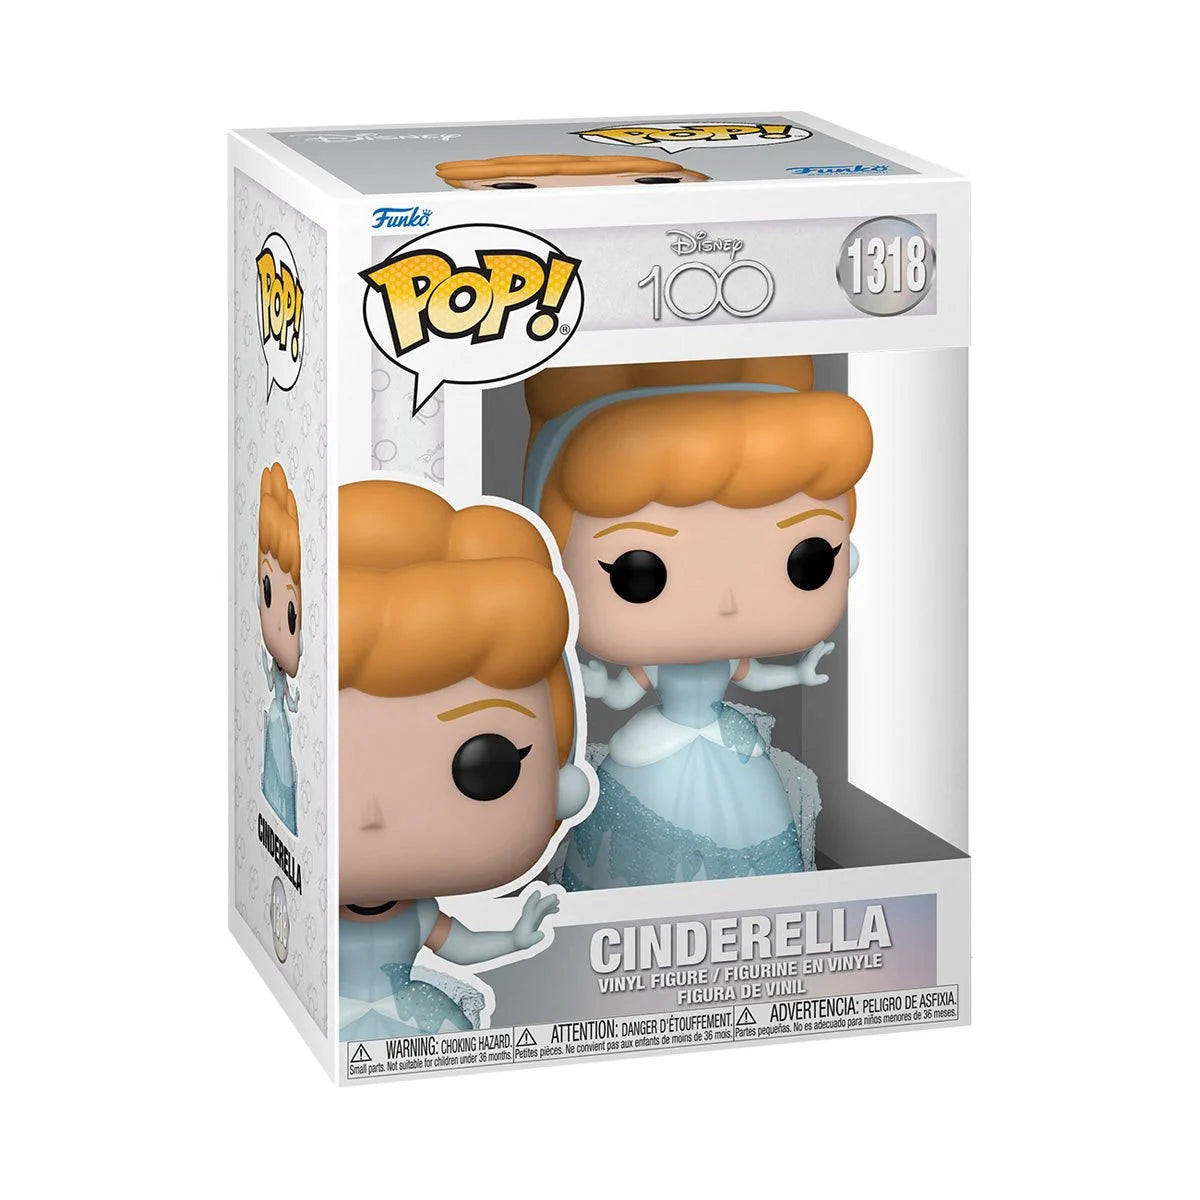 Funko Pop! Disney 100 Cinderella Pop! Vinyl Figure